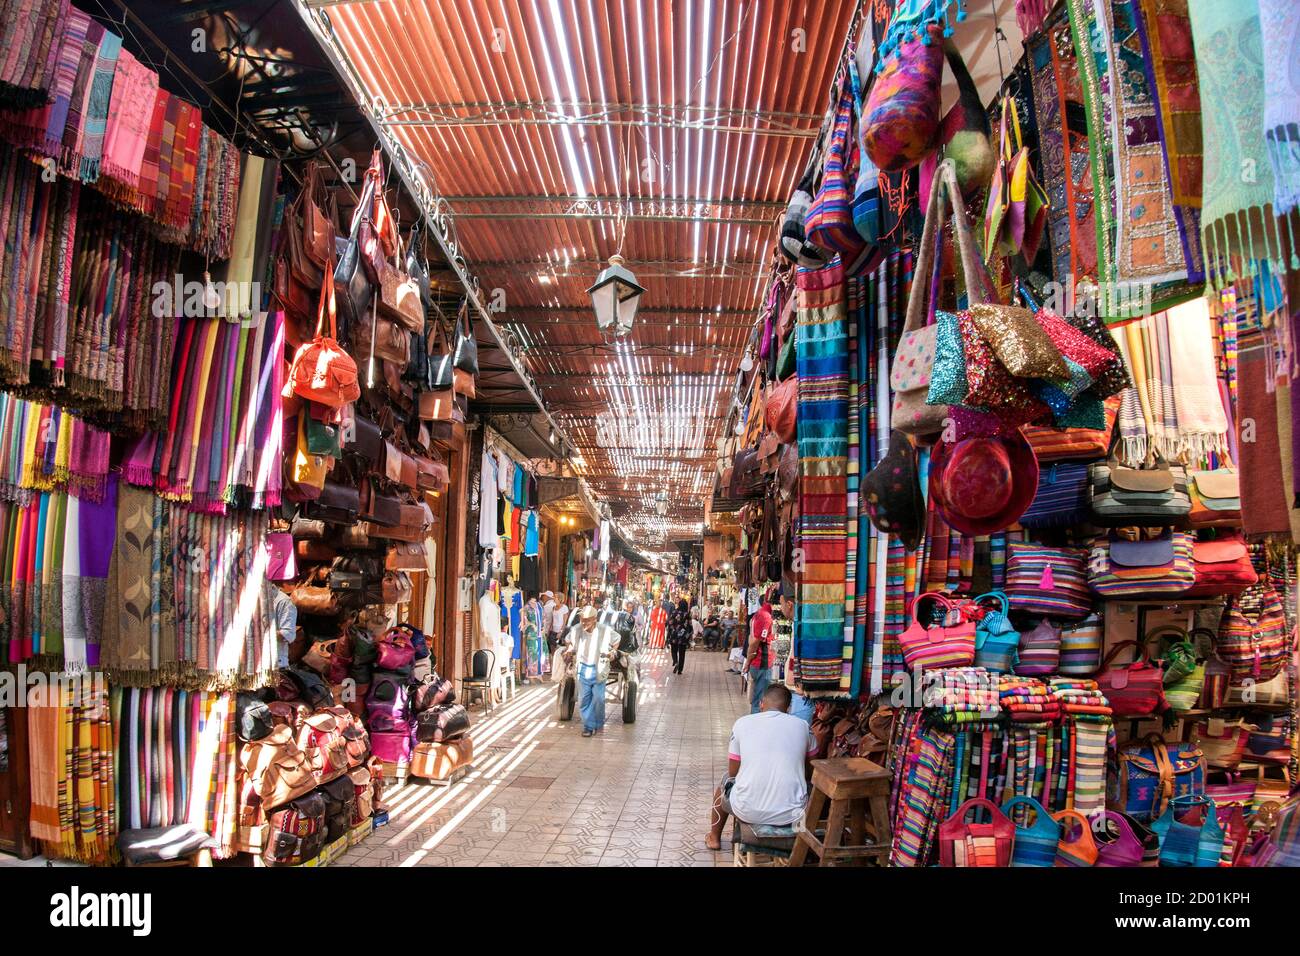 The souk in Marrakech, Morocco. Stock Photo